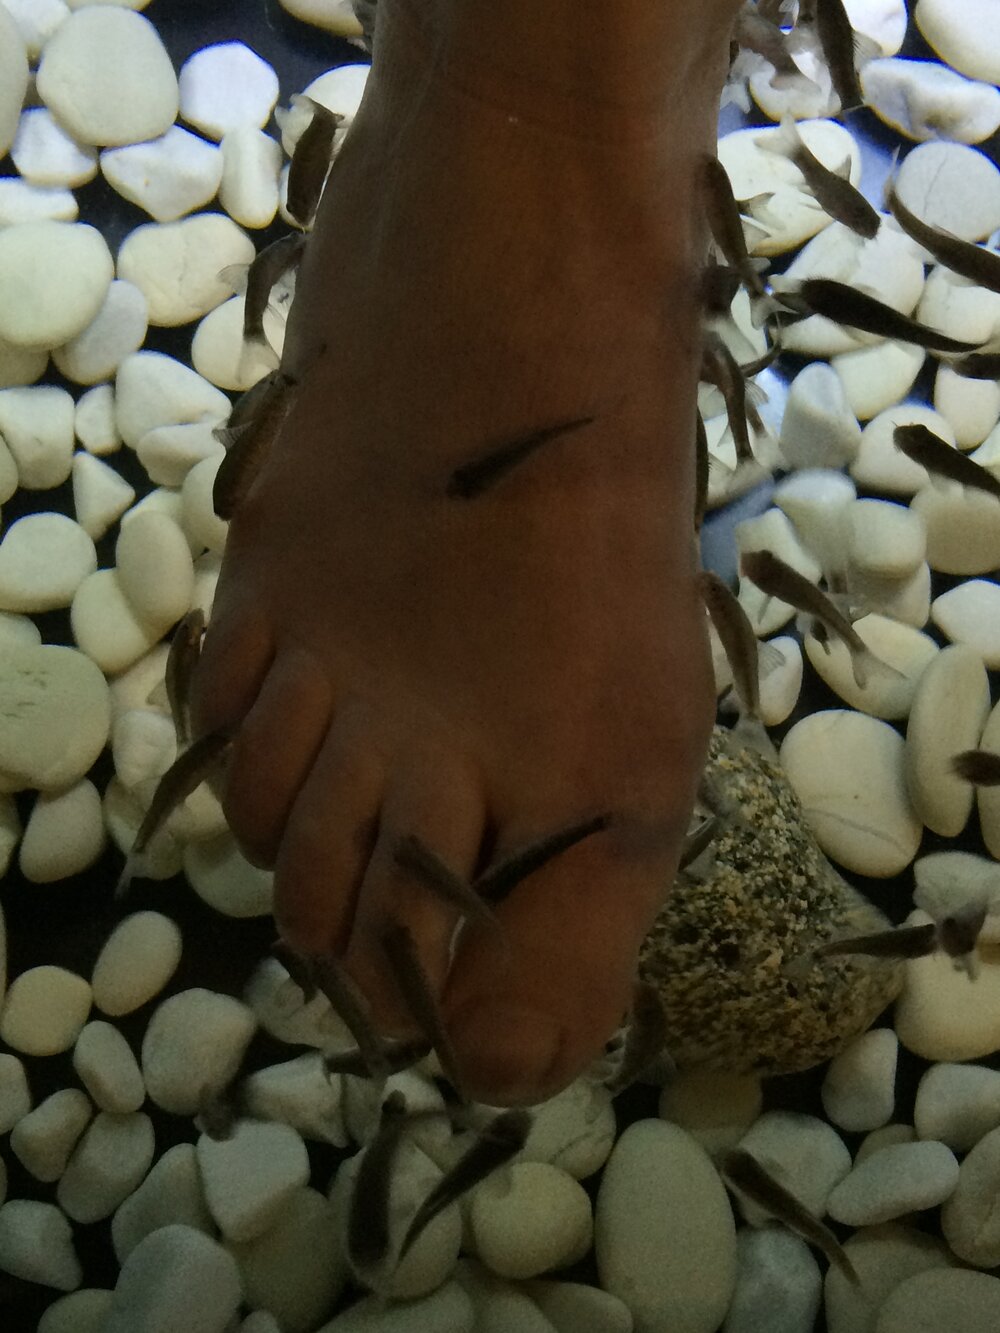 Feet fetish in Barcelona